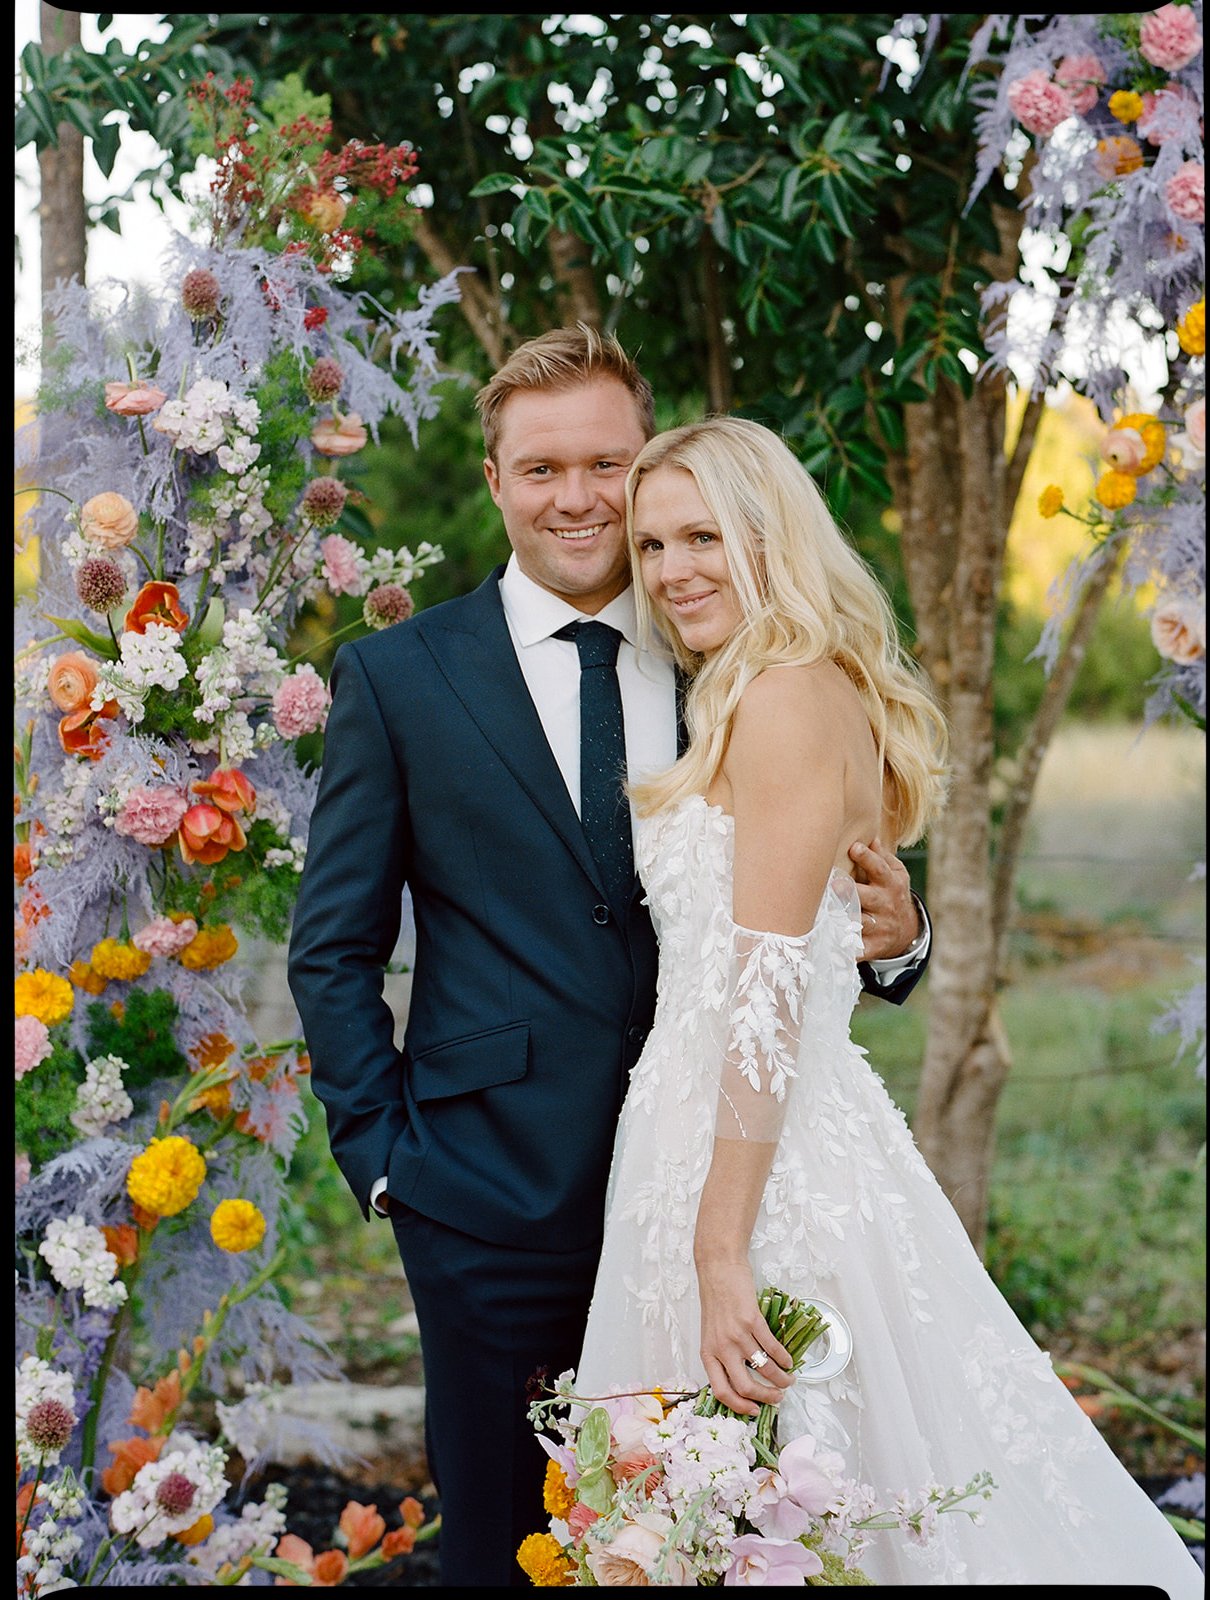 Best-Austin-Wedding-Photographers-Elopement-Film-35mm-Asheville-Santa-Barbara-Backyard-100.jpg